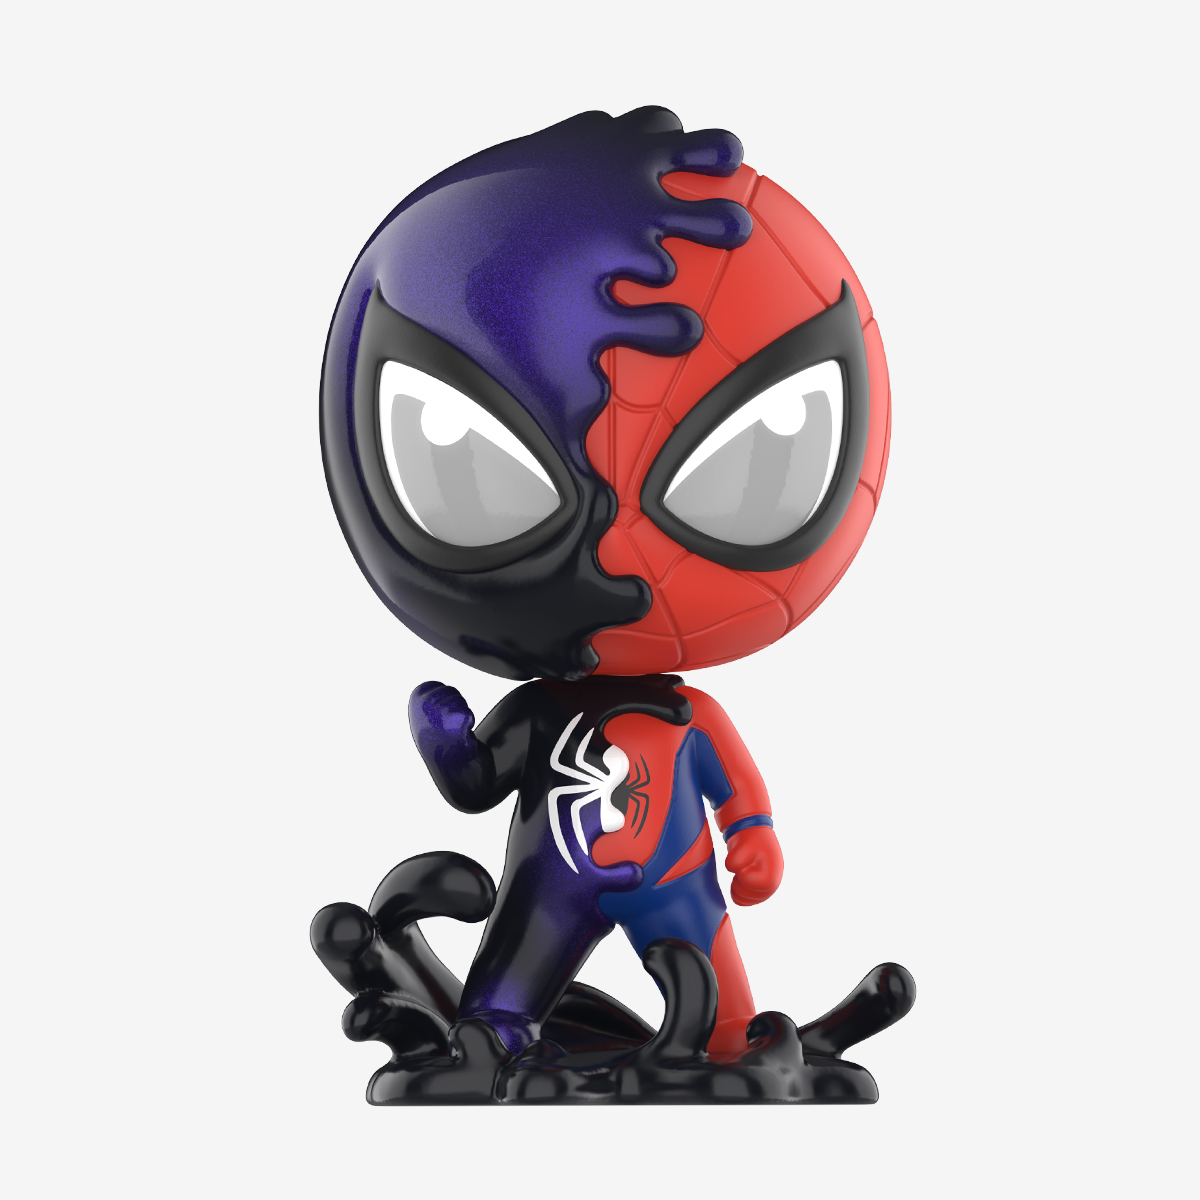 Pop MART – figurine Spider-Man & Maximum Venom Series, boîte mystère, 1  pièce/12 pièces